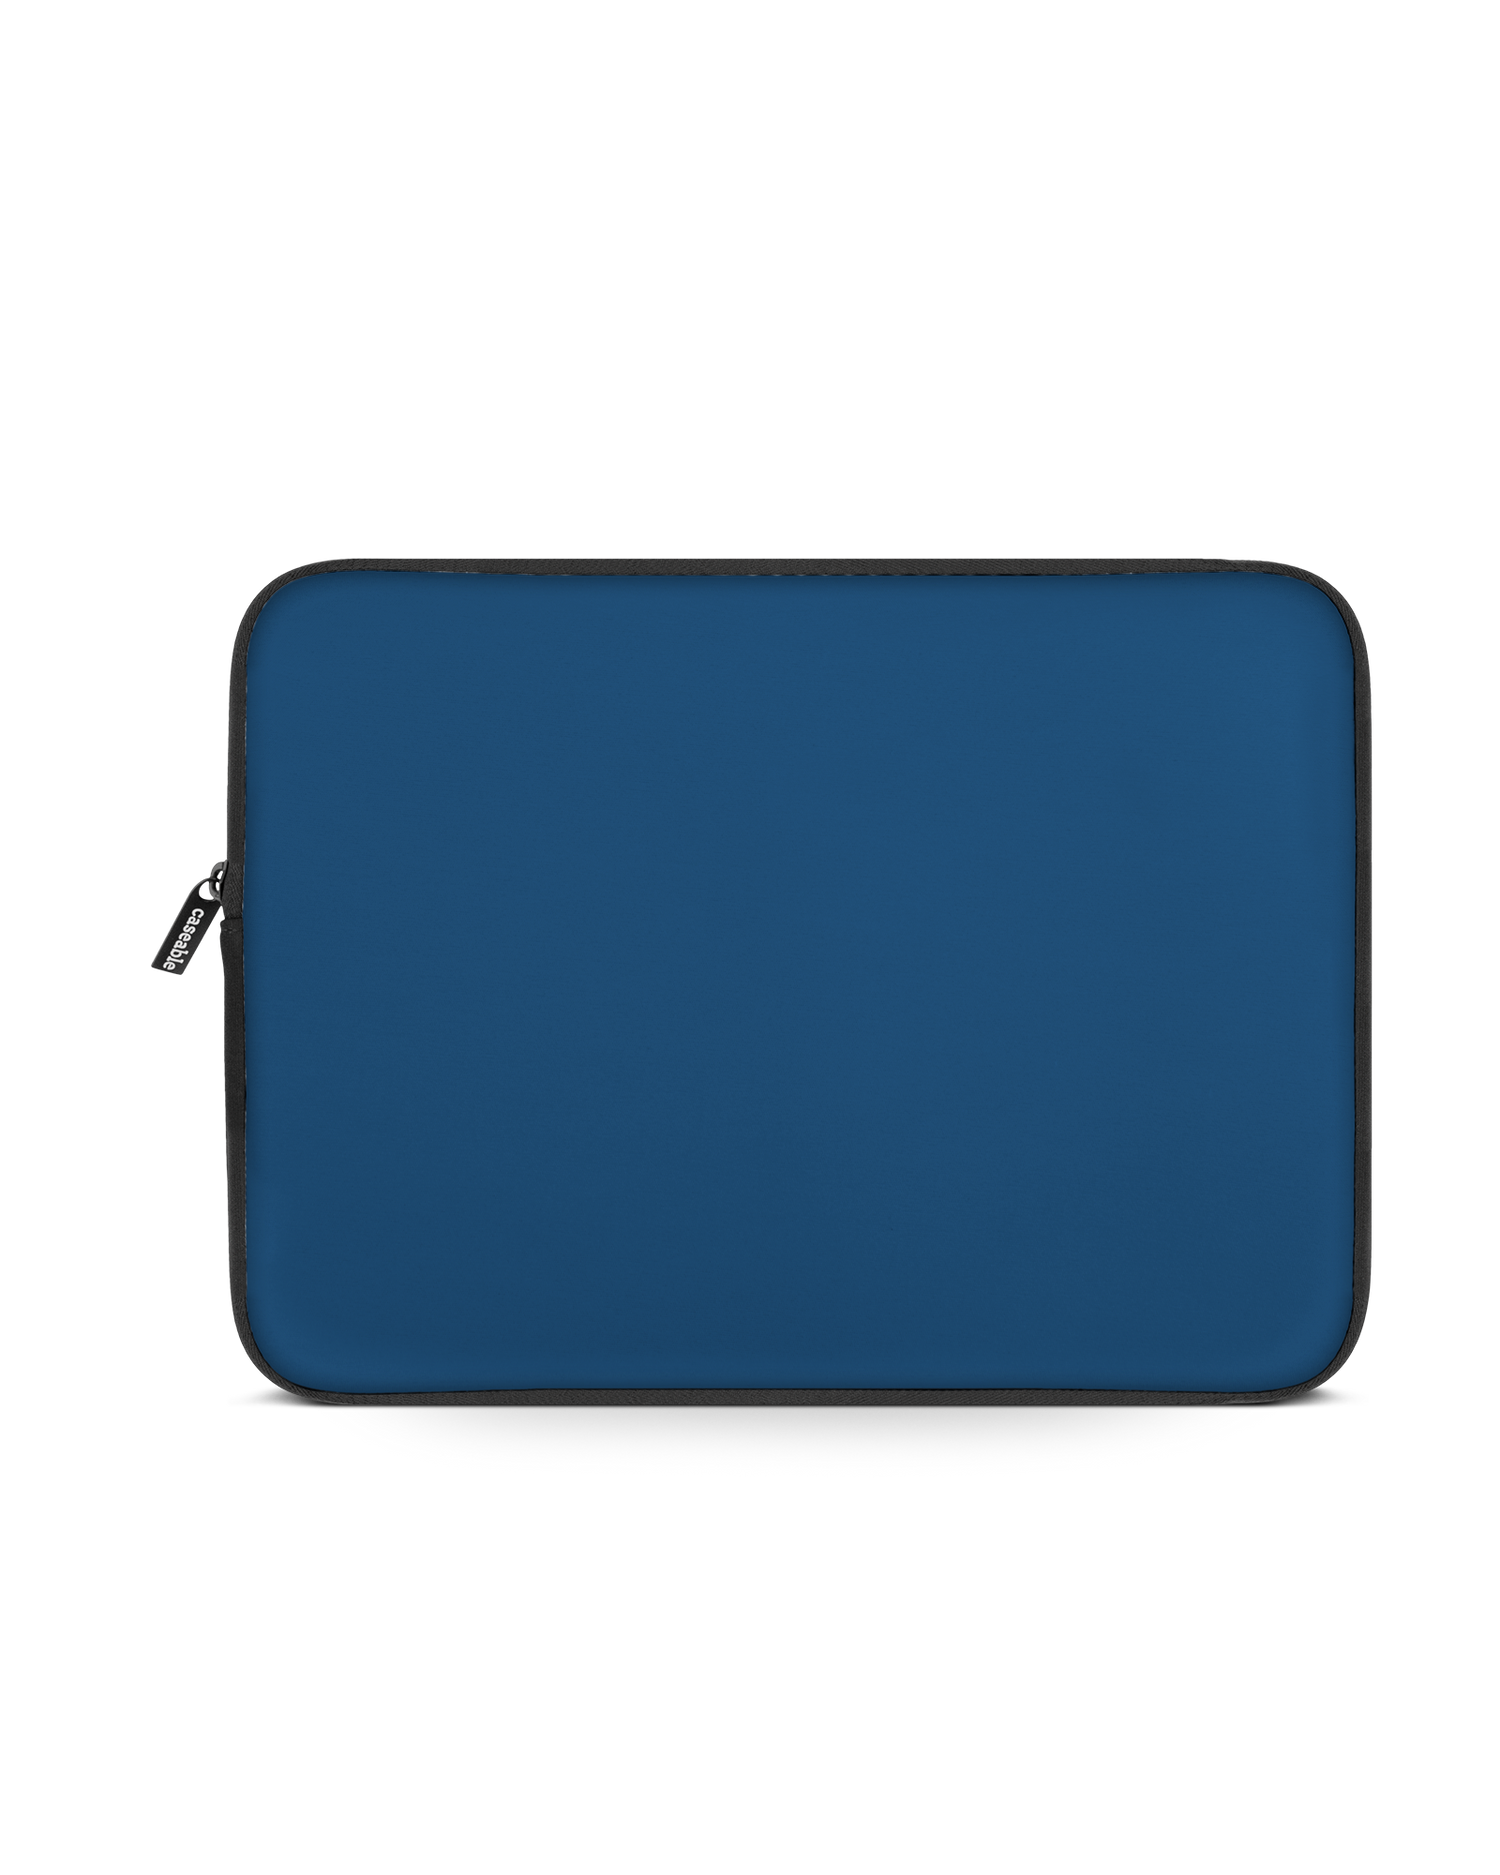 CLASSIC BLUE Laptophülle 13 Zoll: Vorderansicht